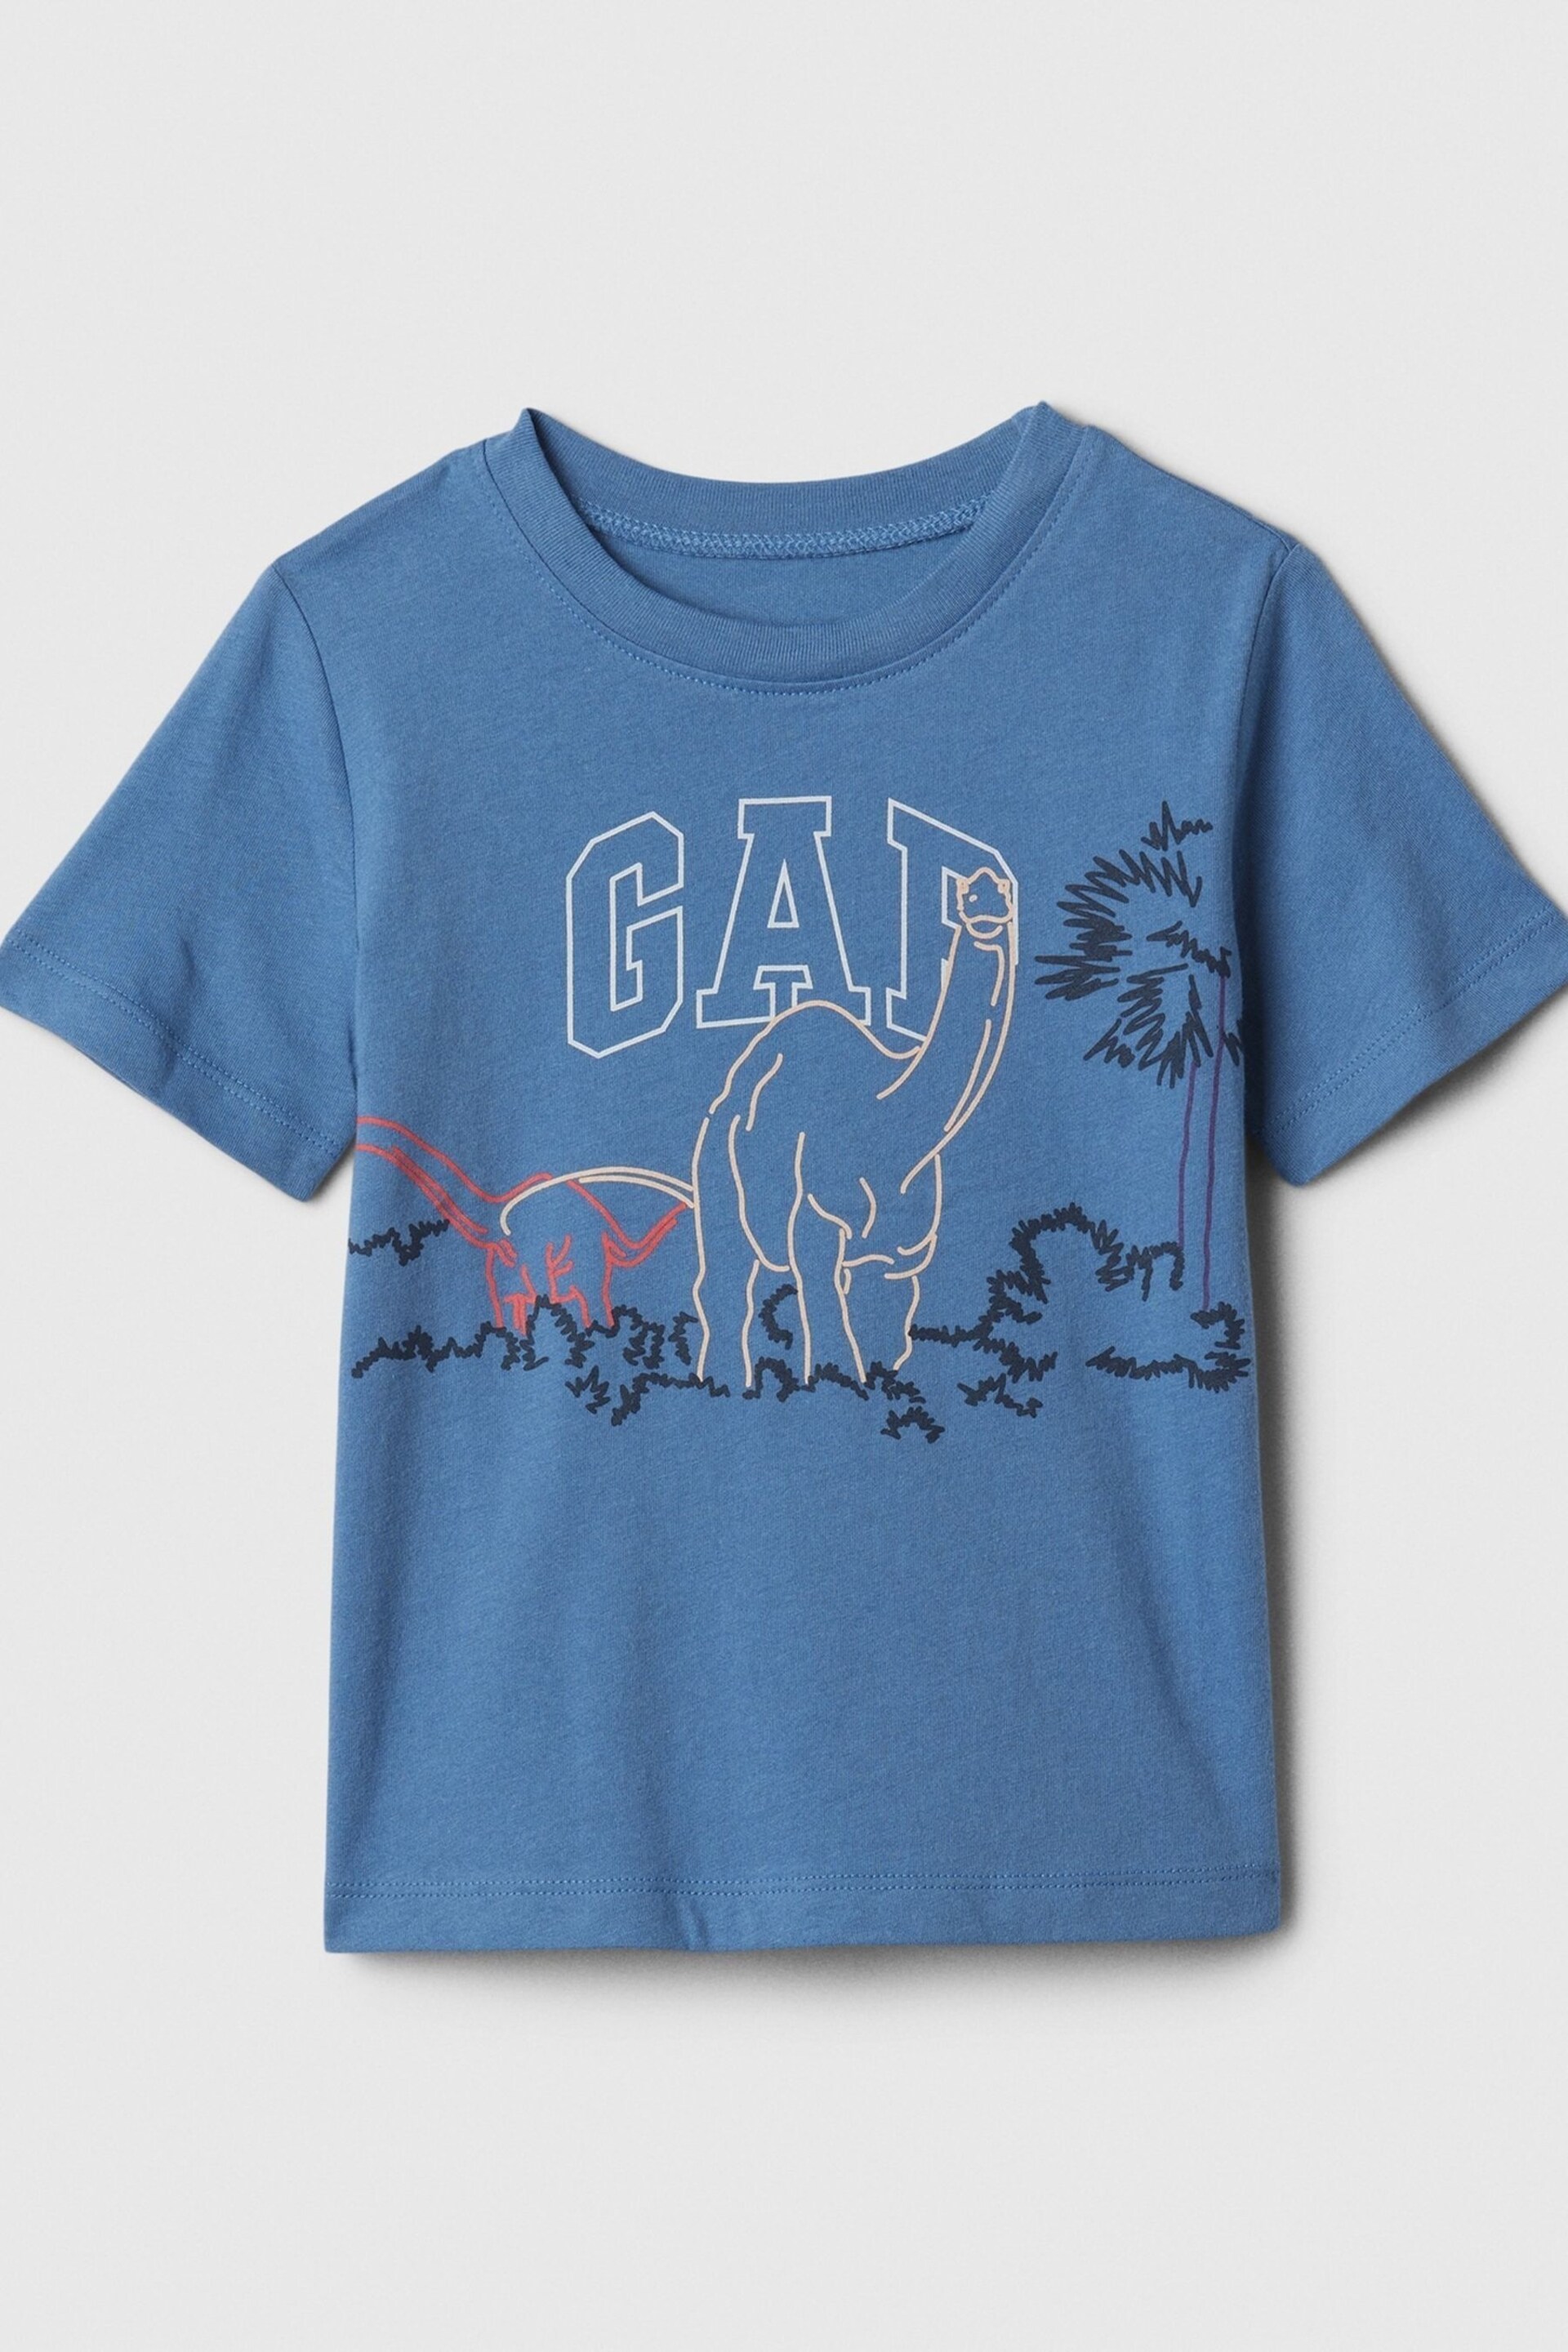 Gap Blue Dino Graphic Logo Short Sleeve Crew Neck T-Shirt (Newborn-5yrs) - Image 1 of 1